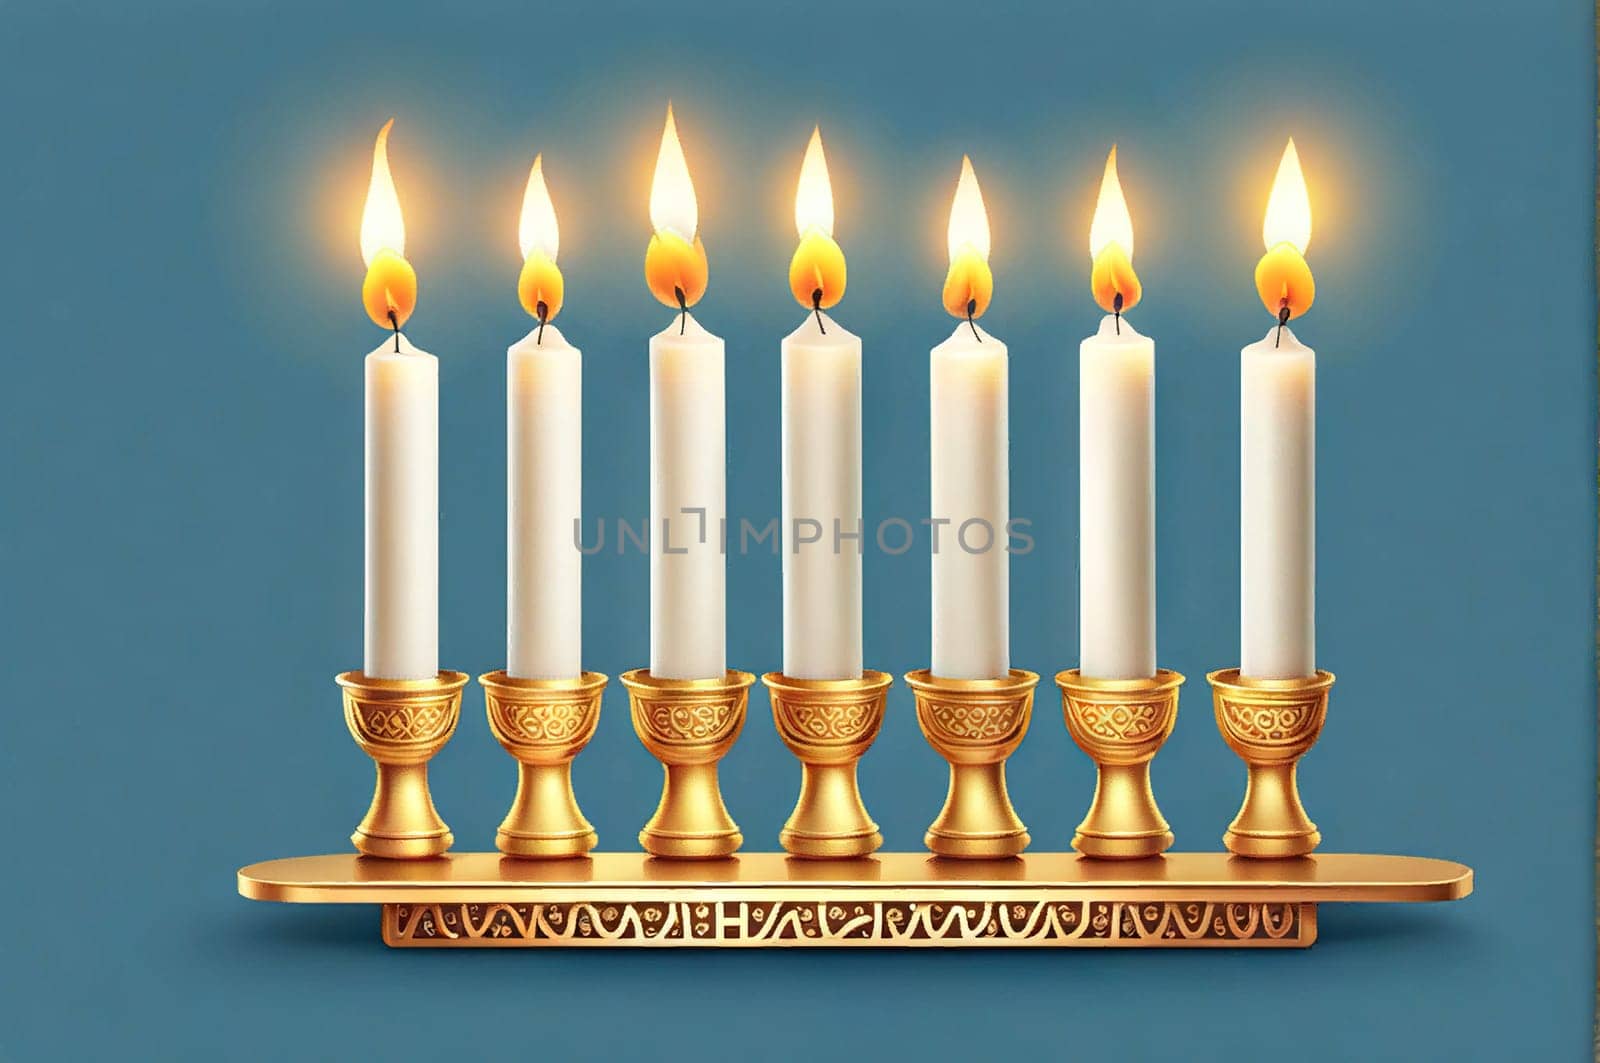 Happy Hanukkah card with beautiful and creative symbols on colorful holiday by EkaterinaPereslavtseva